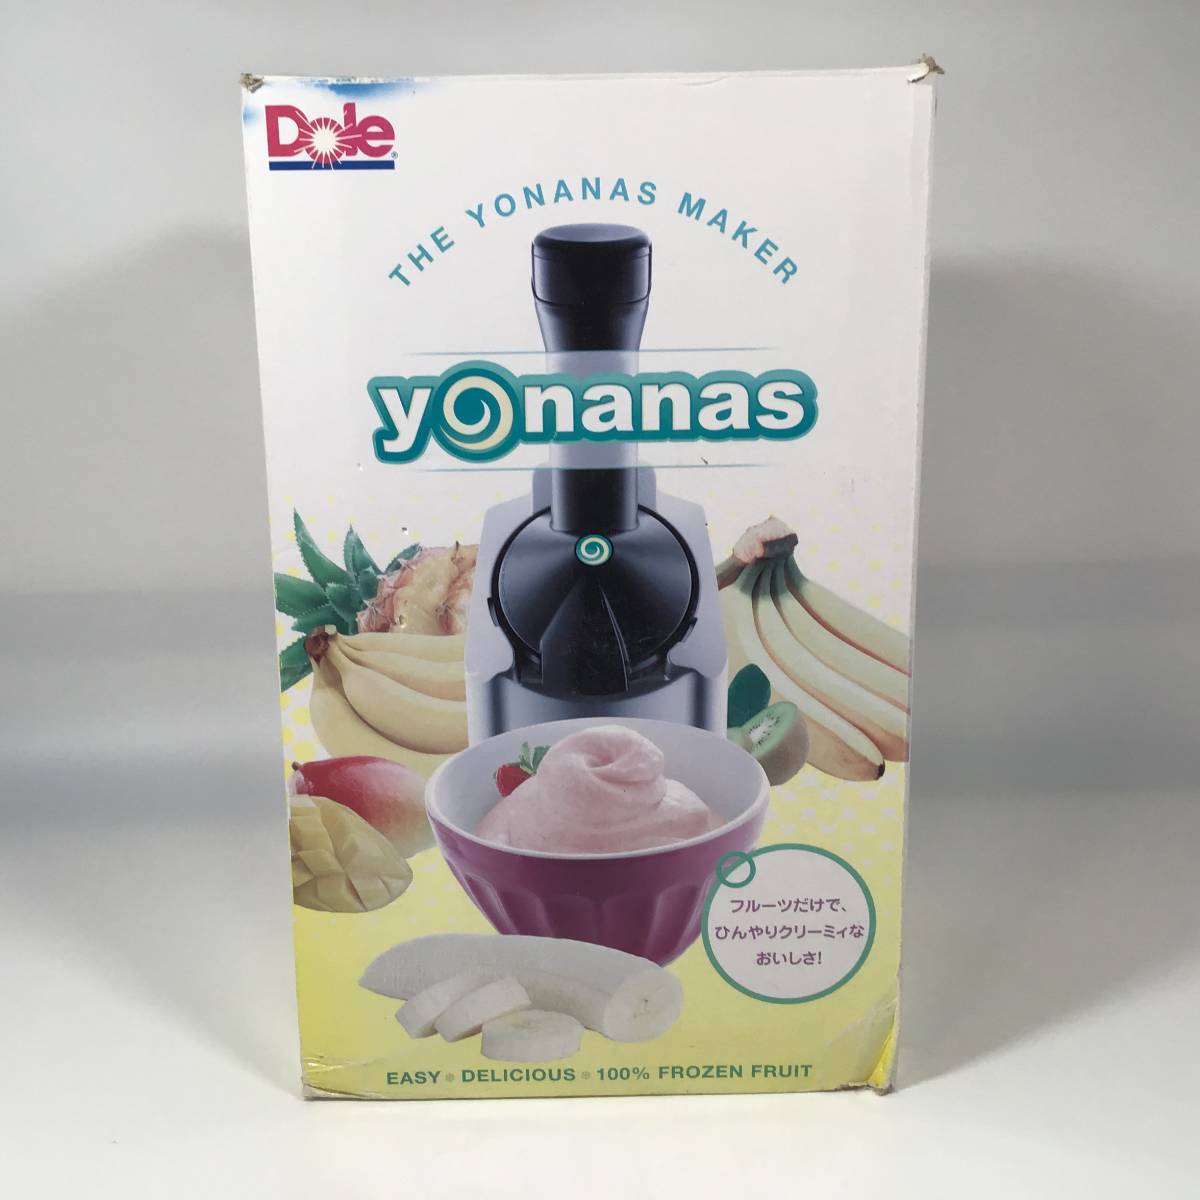 D-422* yonanas 901. same company doll Dole smoothie * juicer * mixer yonanas* operation verification ending 